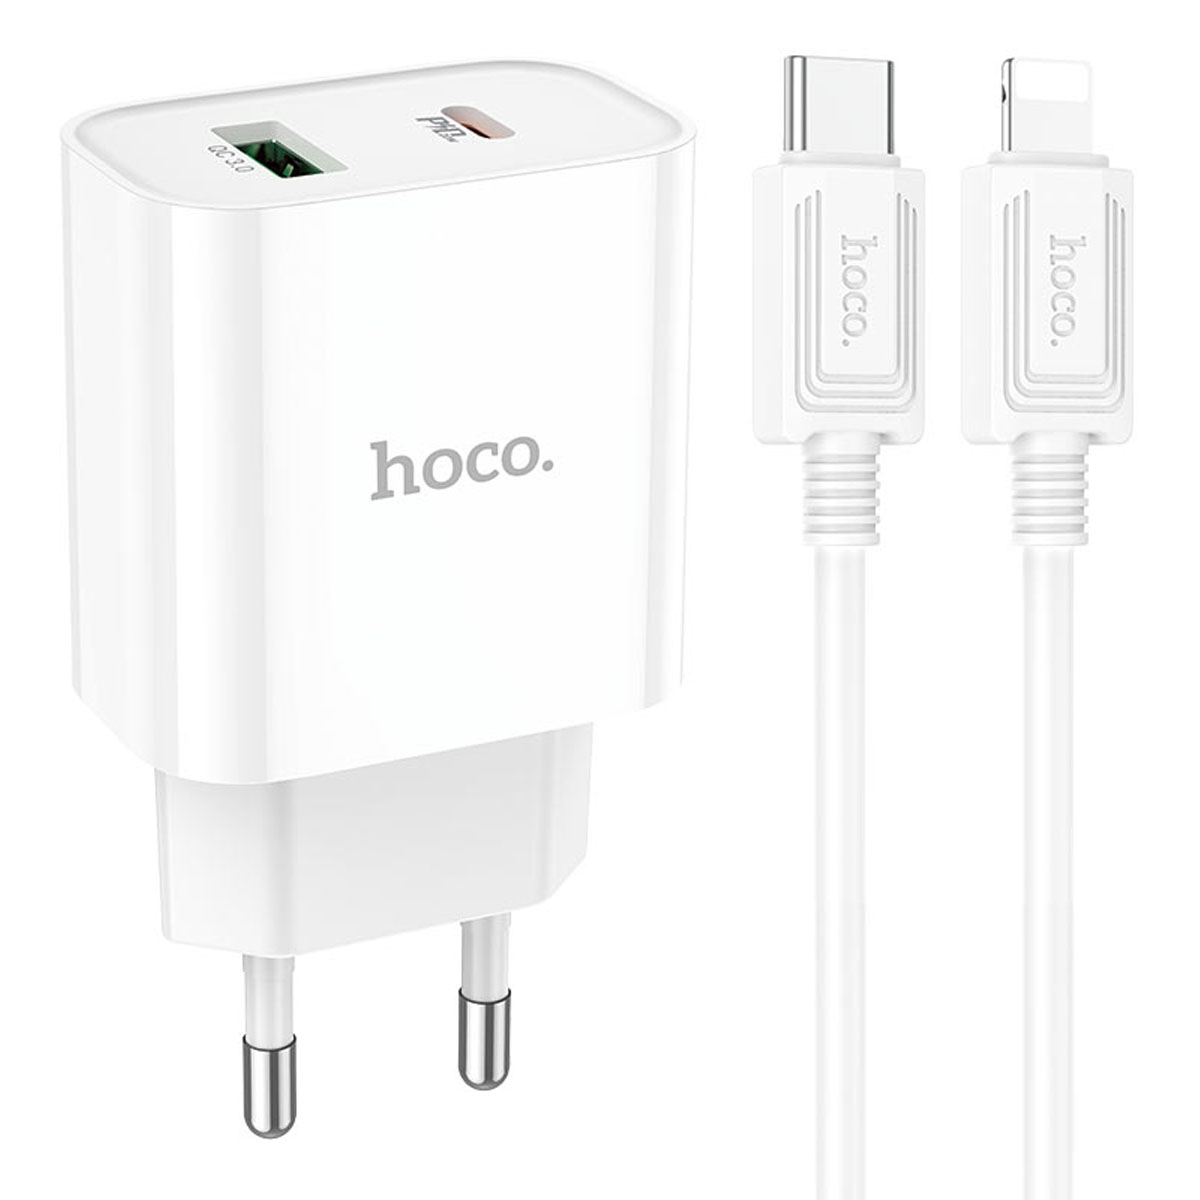 СЗУ (Сетевое зарядное устройство) HOCO C80A Plus Rapido с кабелем USB Type C на Lightning 8 pin, 20W, 1 USB Type C, 1 USB, QC3.0, PD20W, длина 1 метр, цвет белый